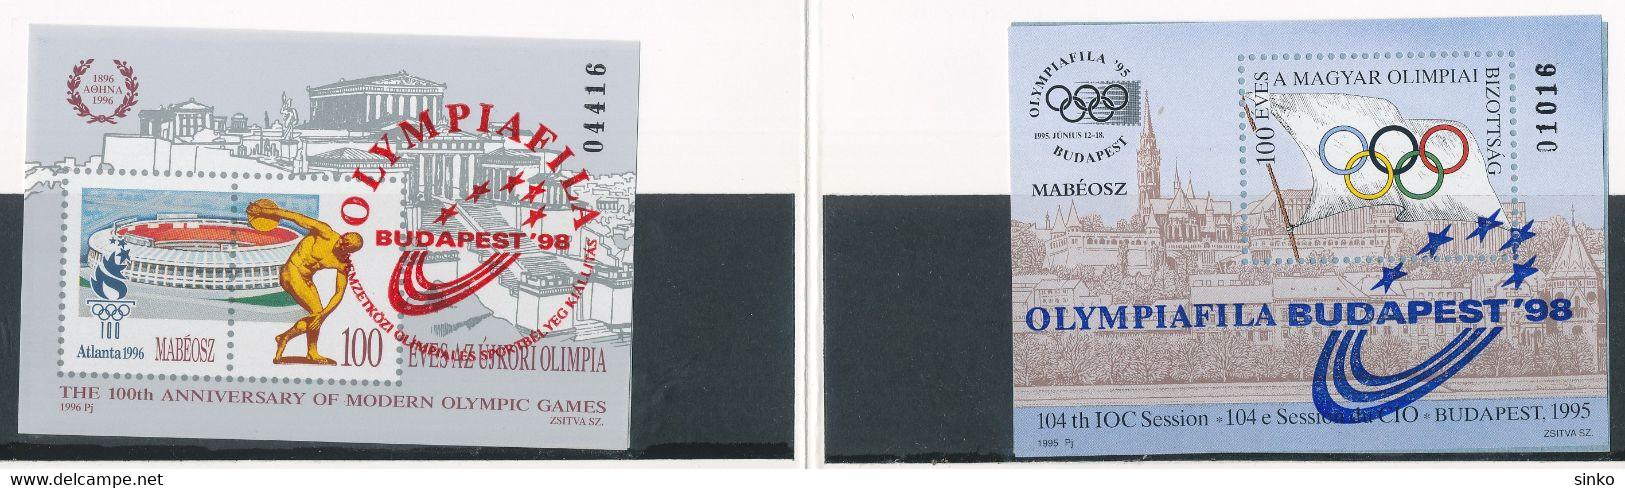 1998. Olympiafila (I.) - Commemorative Sheet Set With Overprint - Foglietto Ricordo